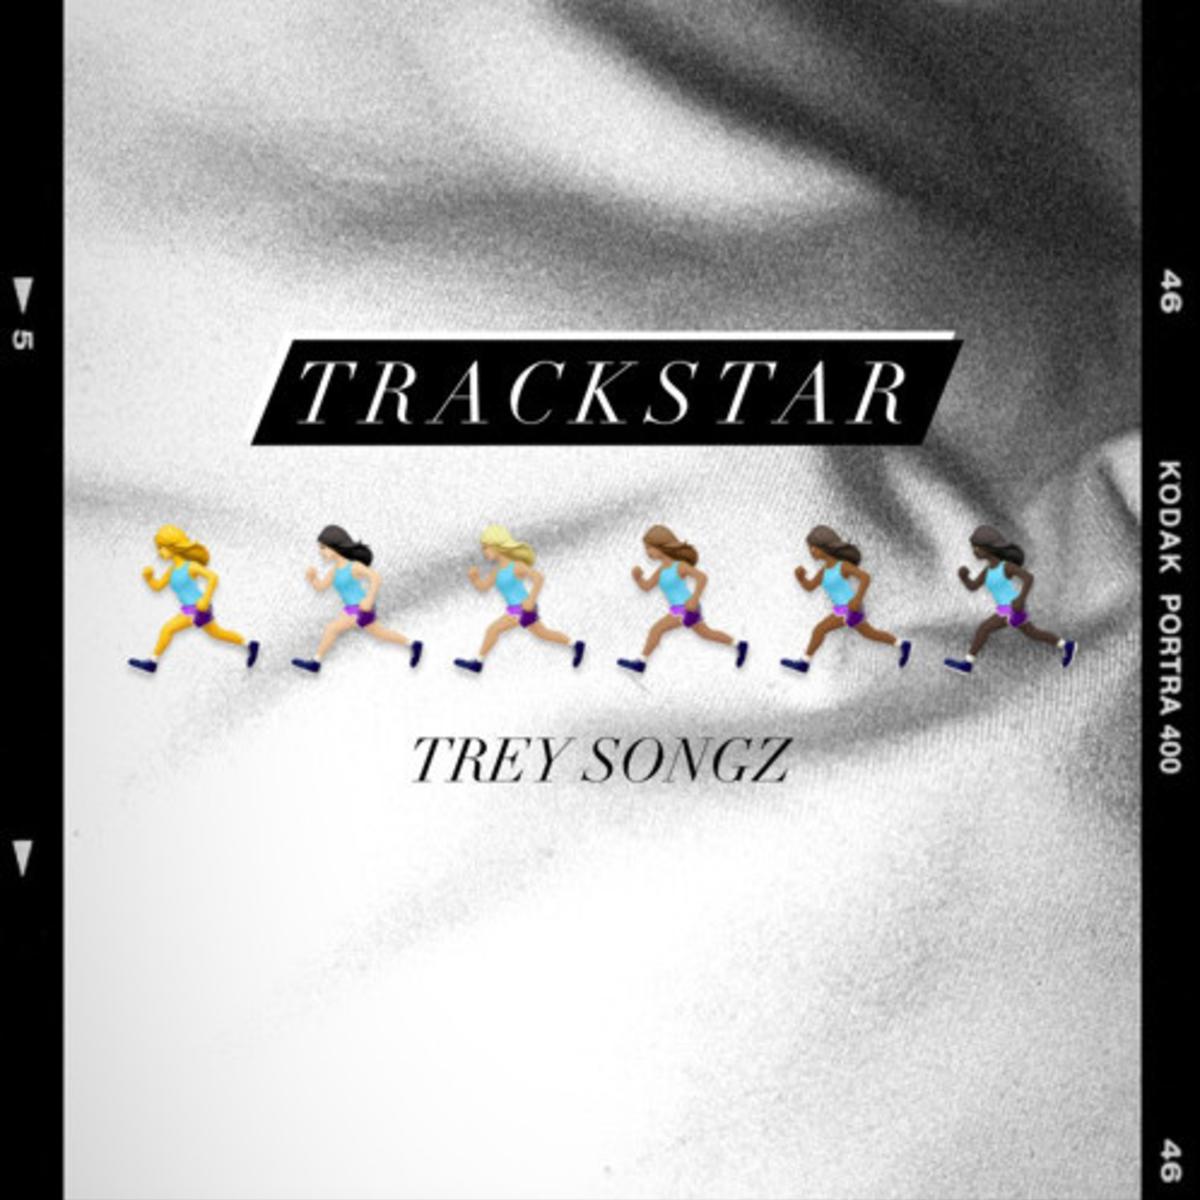 Trey Songz Trackstar (triggamix)